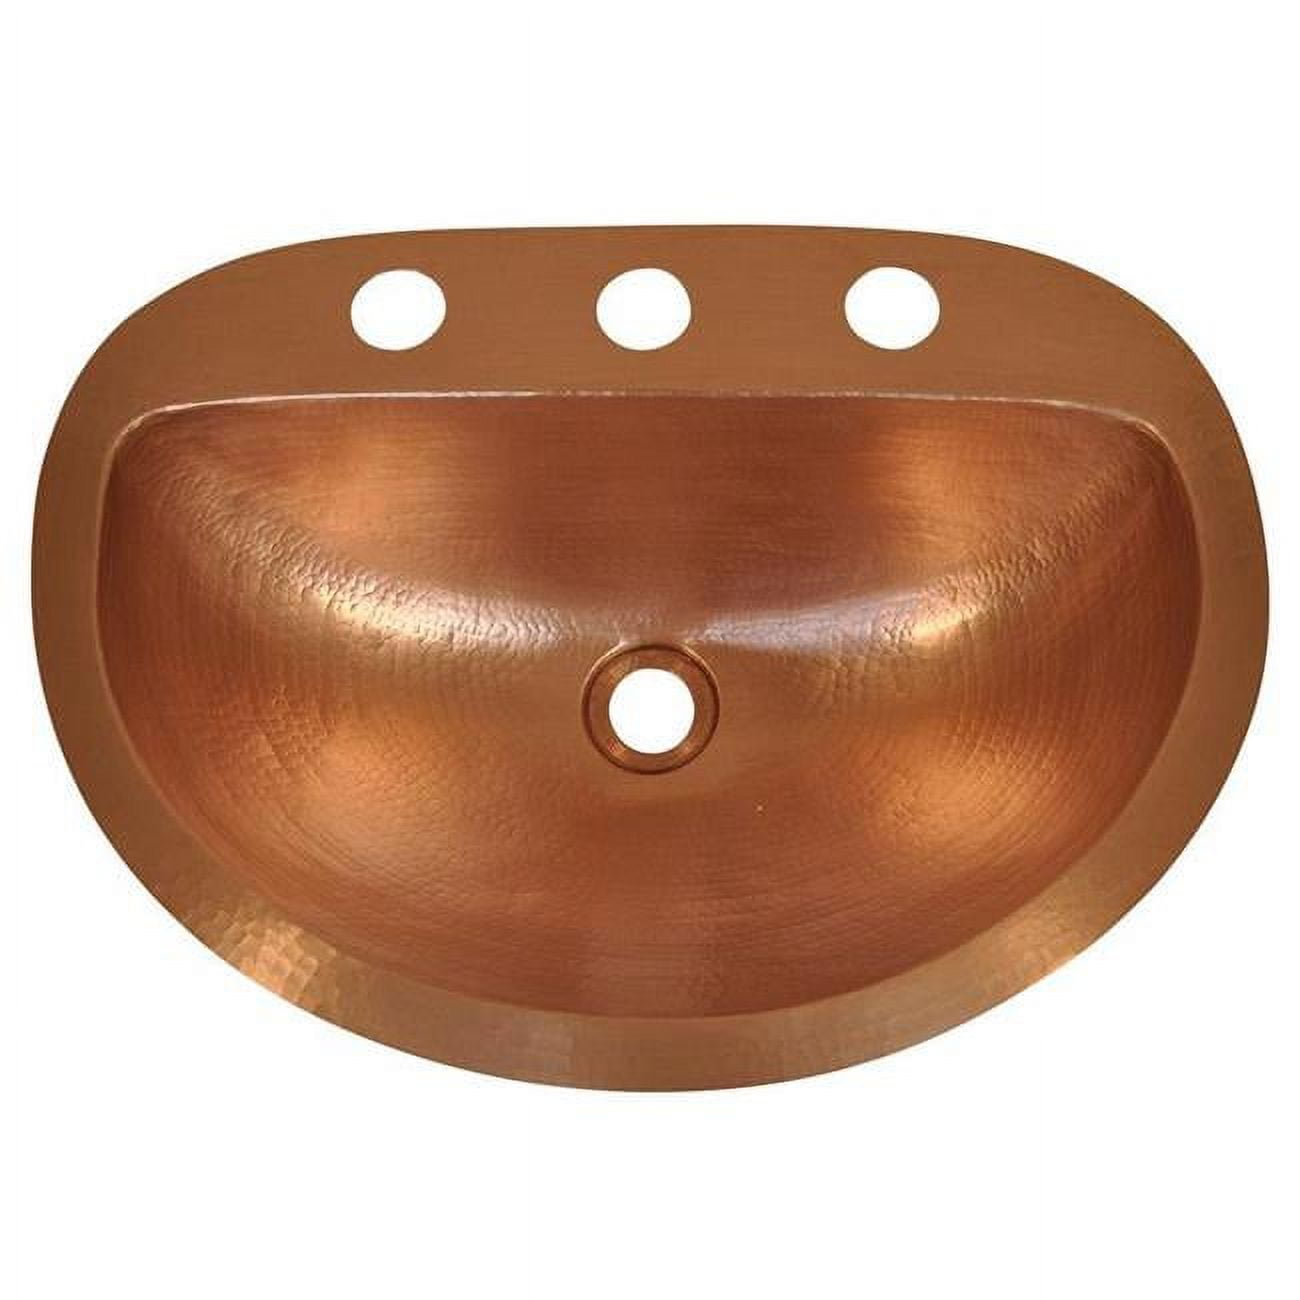 Cos-dg-19-ma Copper Oval Vessel Sink, Matte - Durango Design - 6 X 17 X 19 In.